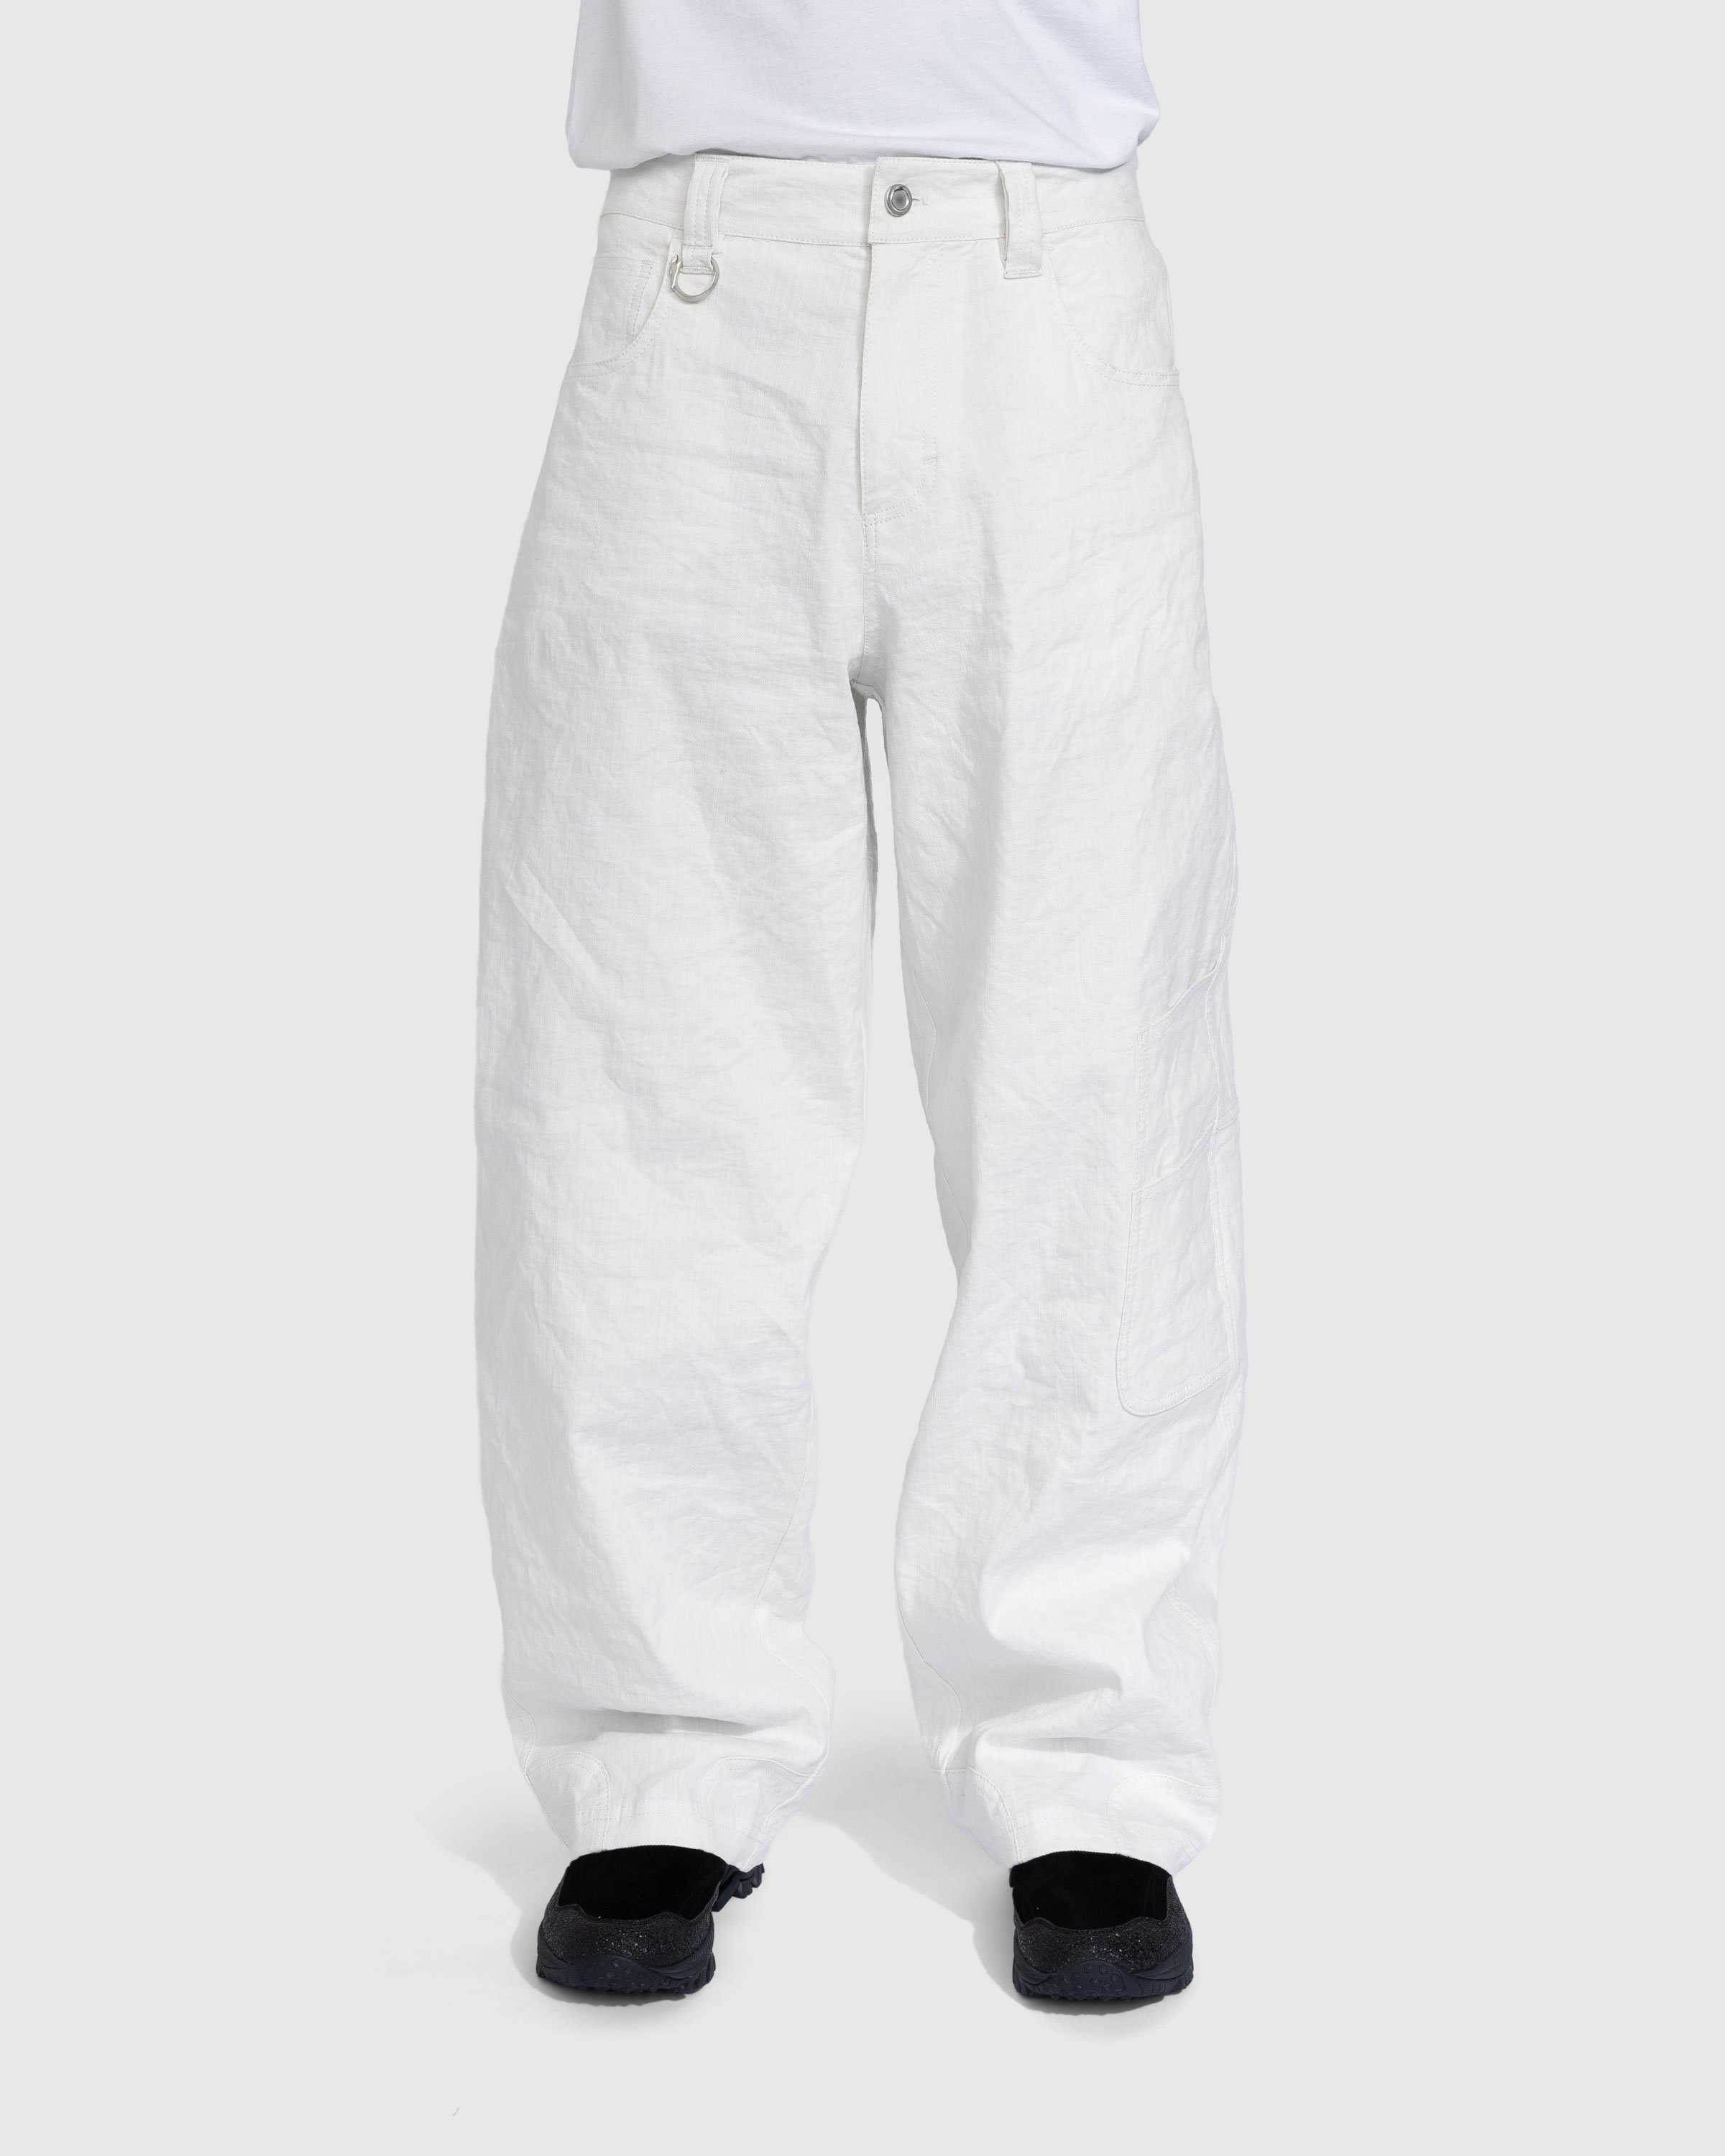 Trussardi - Wrinkled Cotton Trousers White - Clothing - White - Image 2